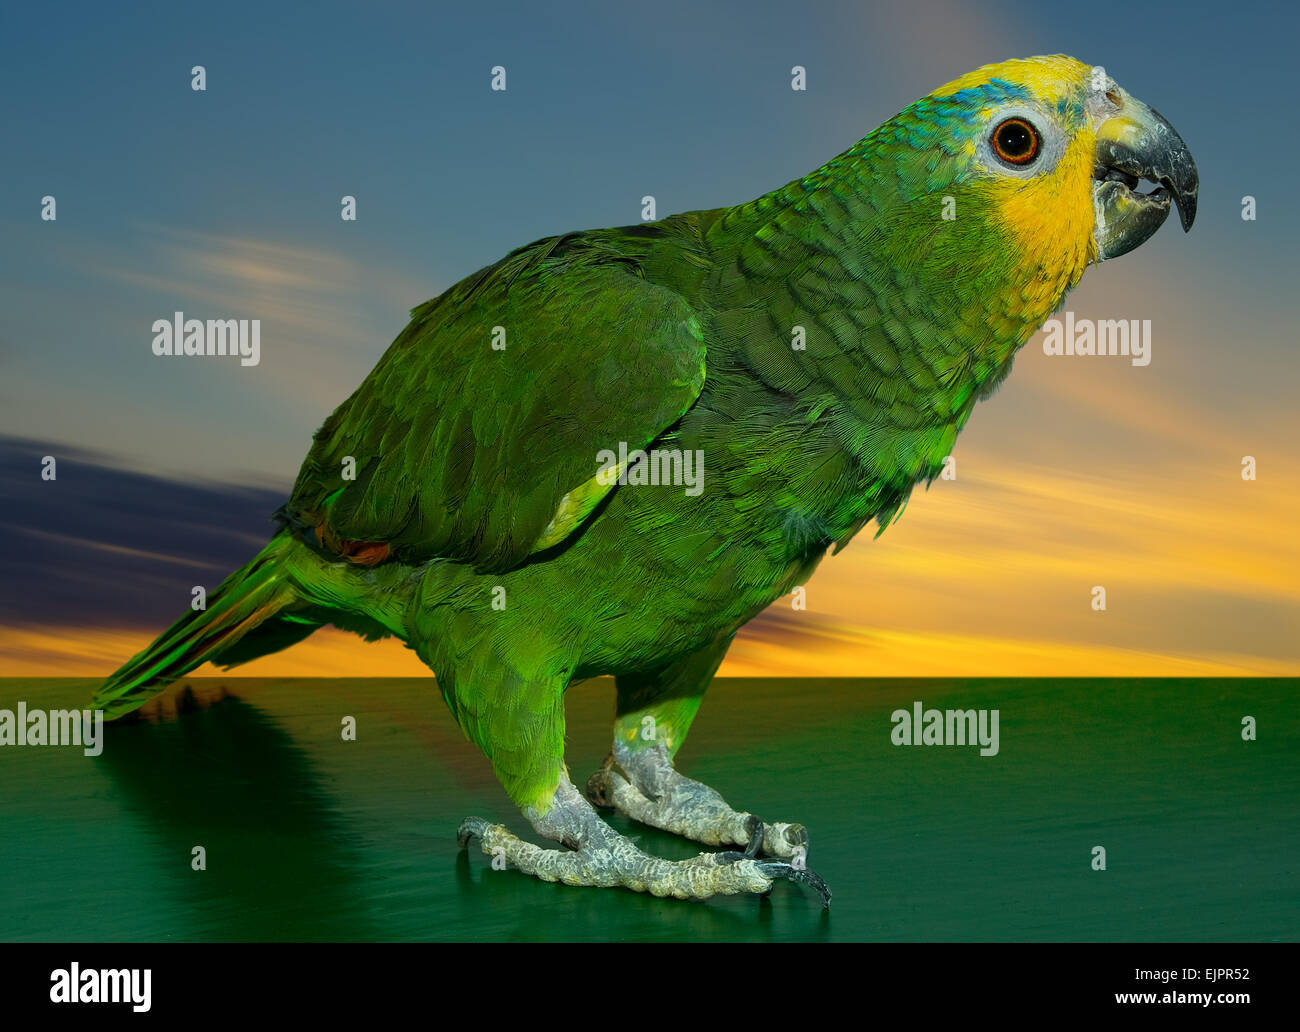 Parrot sidelobes Amazon.(Amazona aestiva). Stock Photo